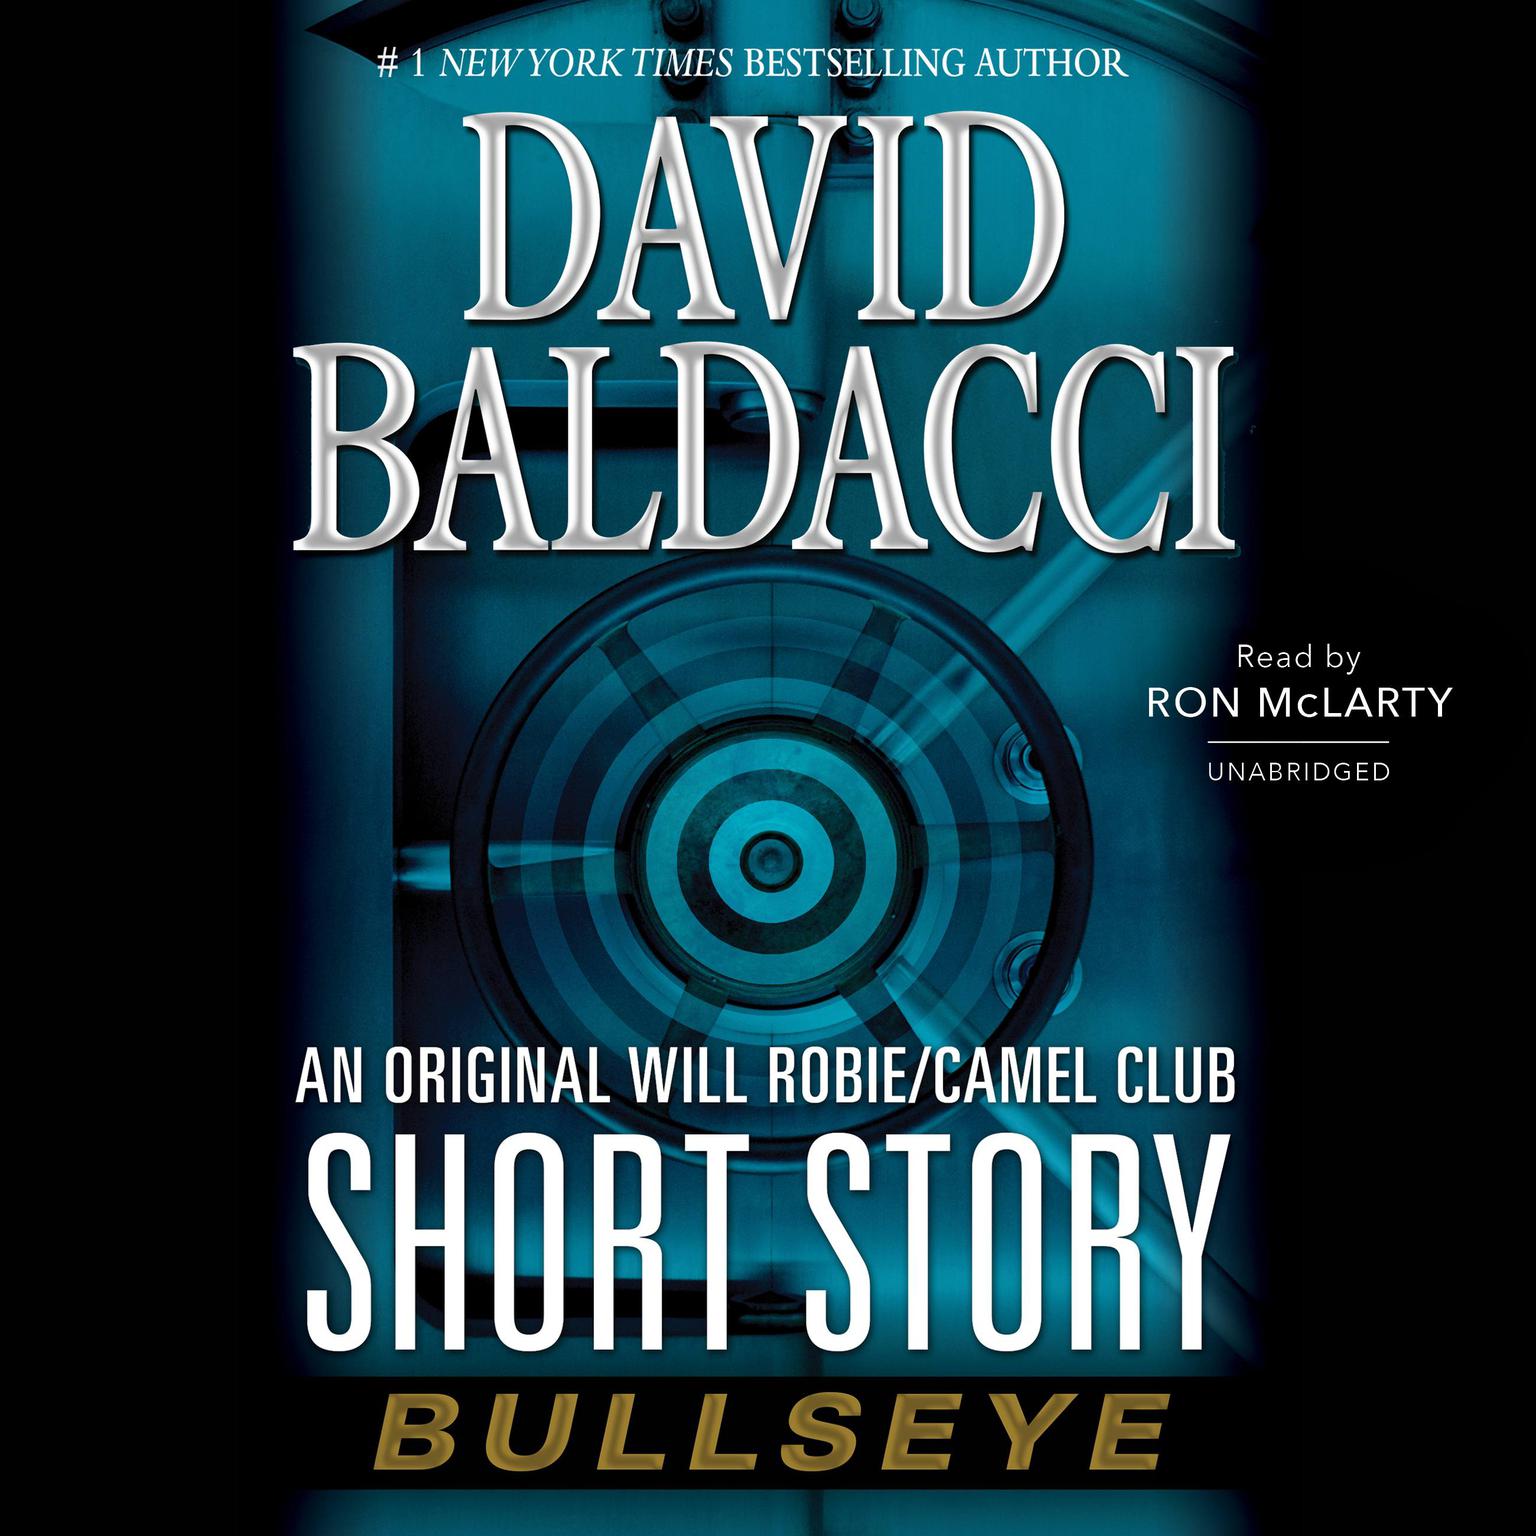 Bullseye: An Original Will Robie / Camel Club Short Story Audiobook, by David Baldacci